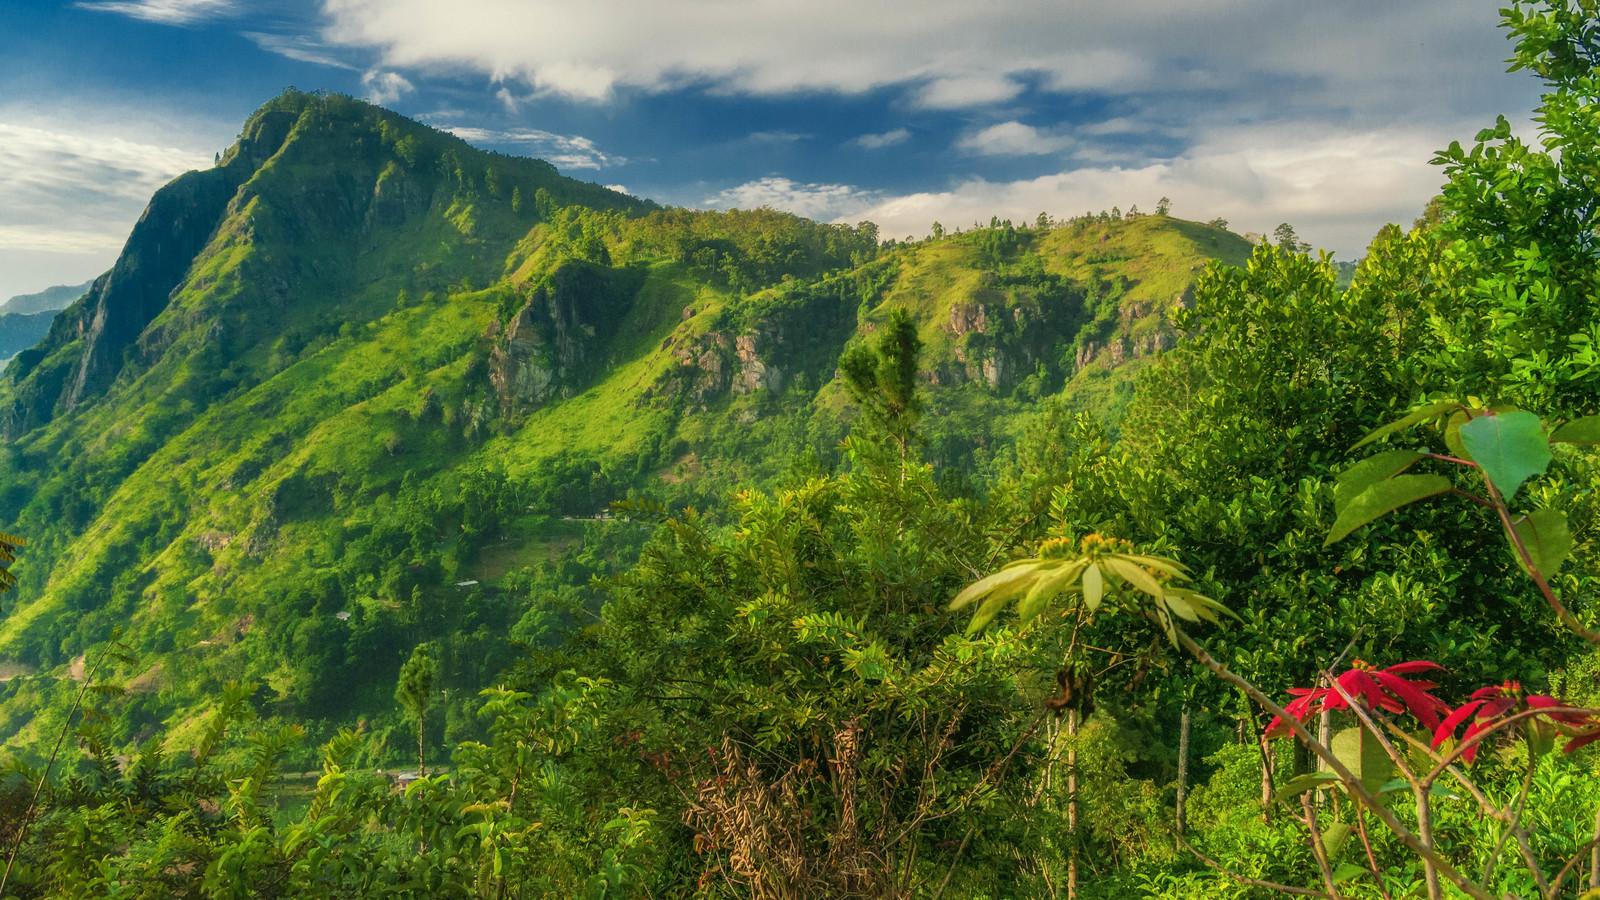 The Lush green hills in Central Sri Lanka